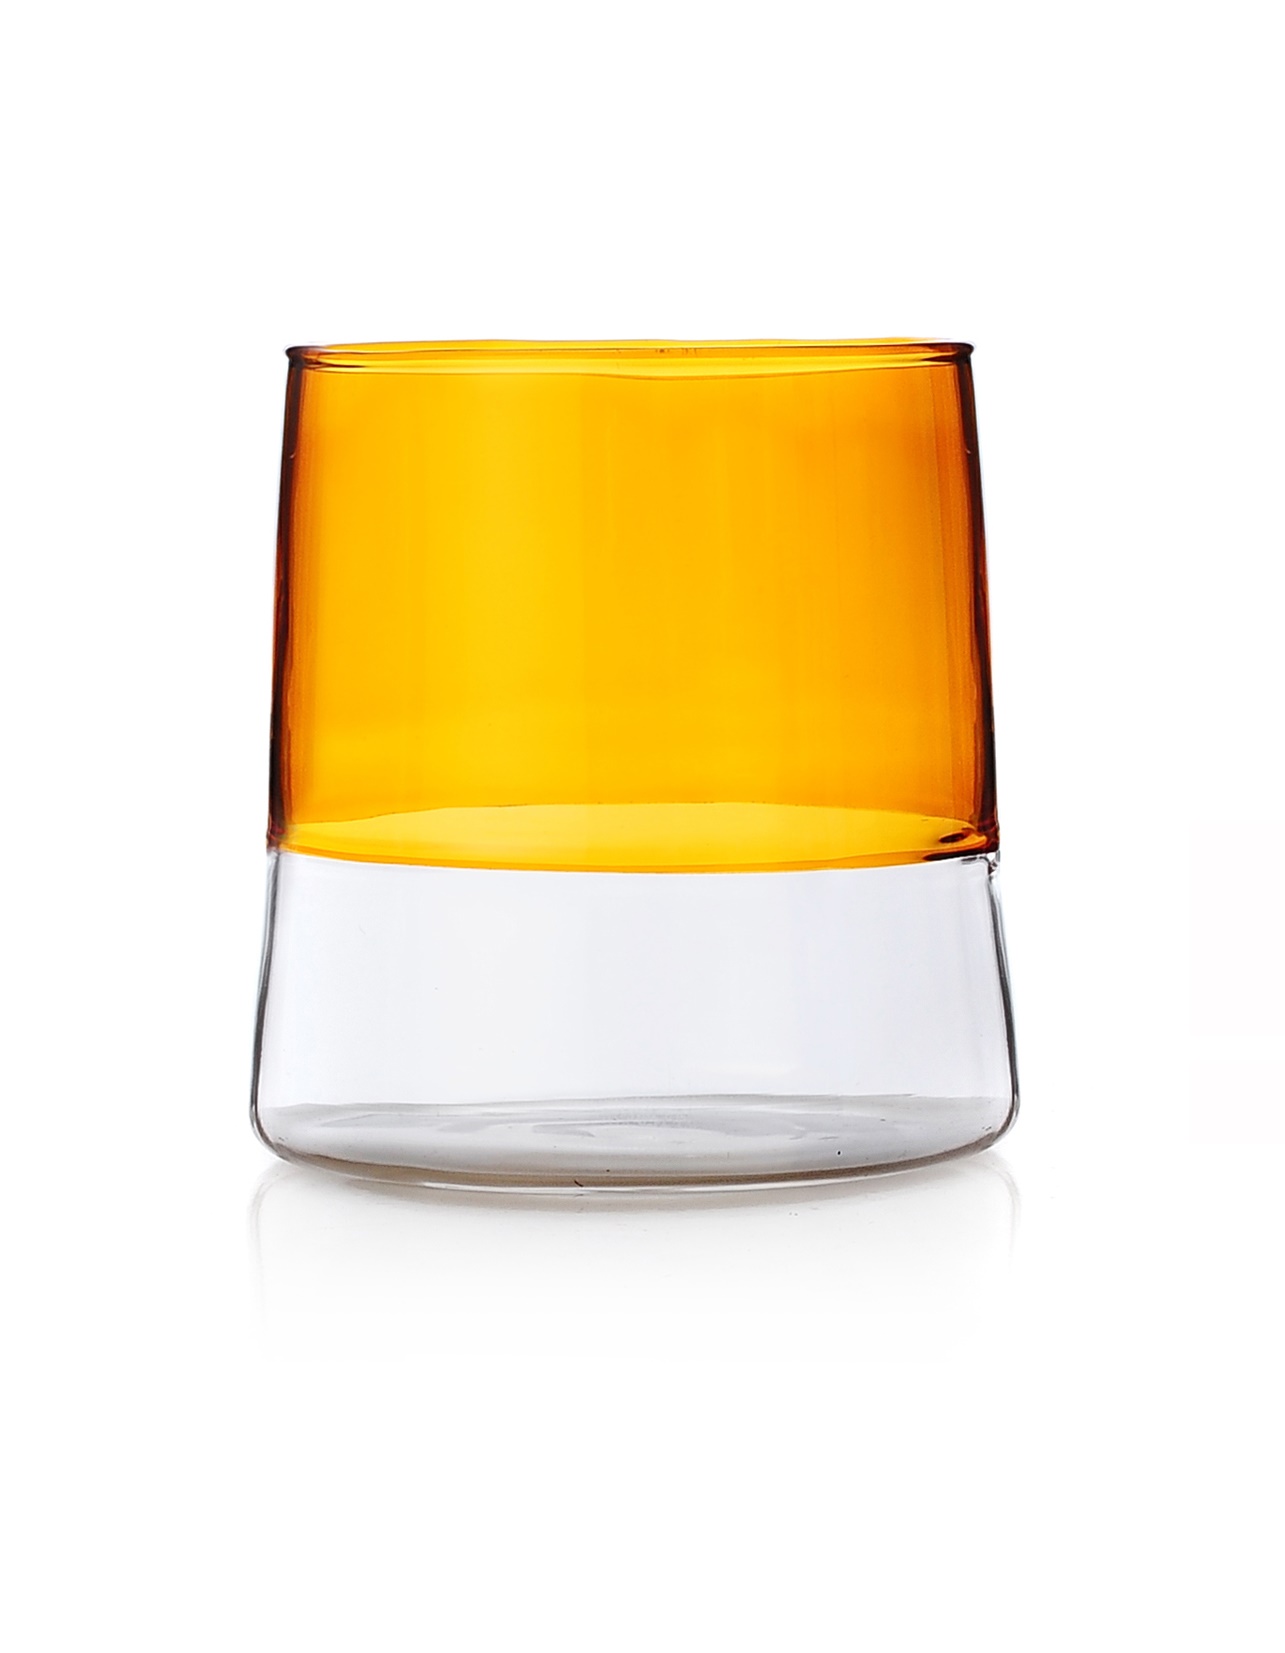 https://www.newformsdesign.com/images/prodotti/2240-10-Light-colore-ambra-bicchiere-vino.jpg